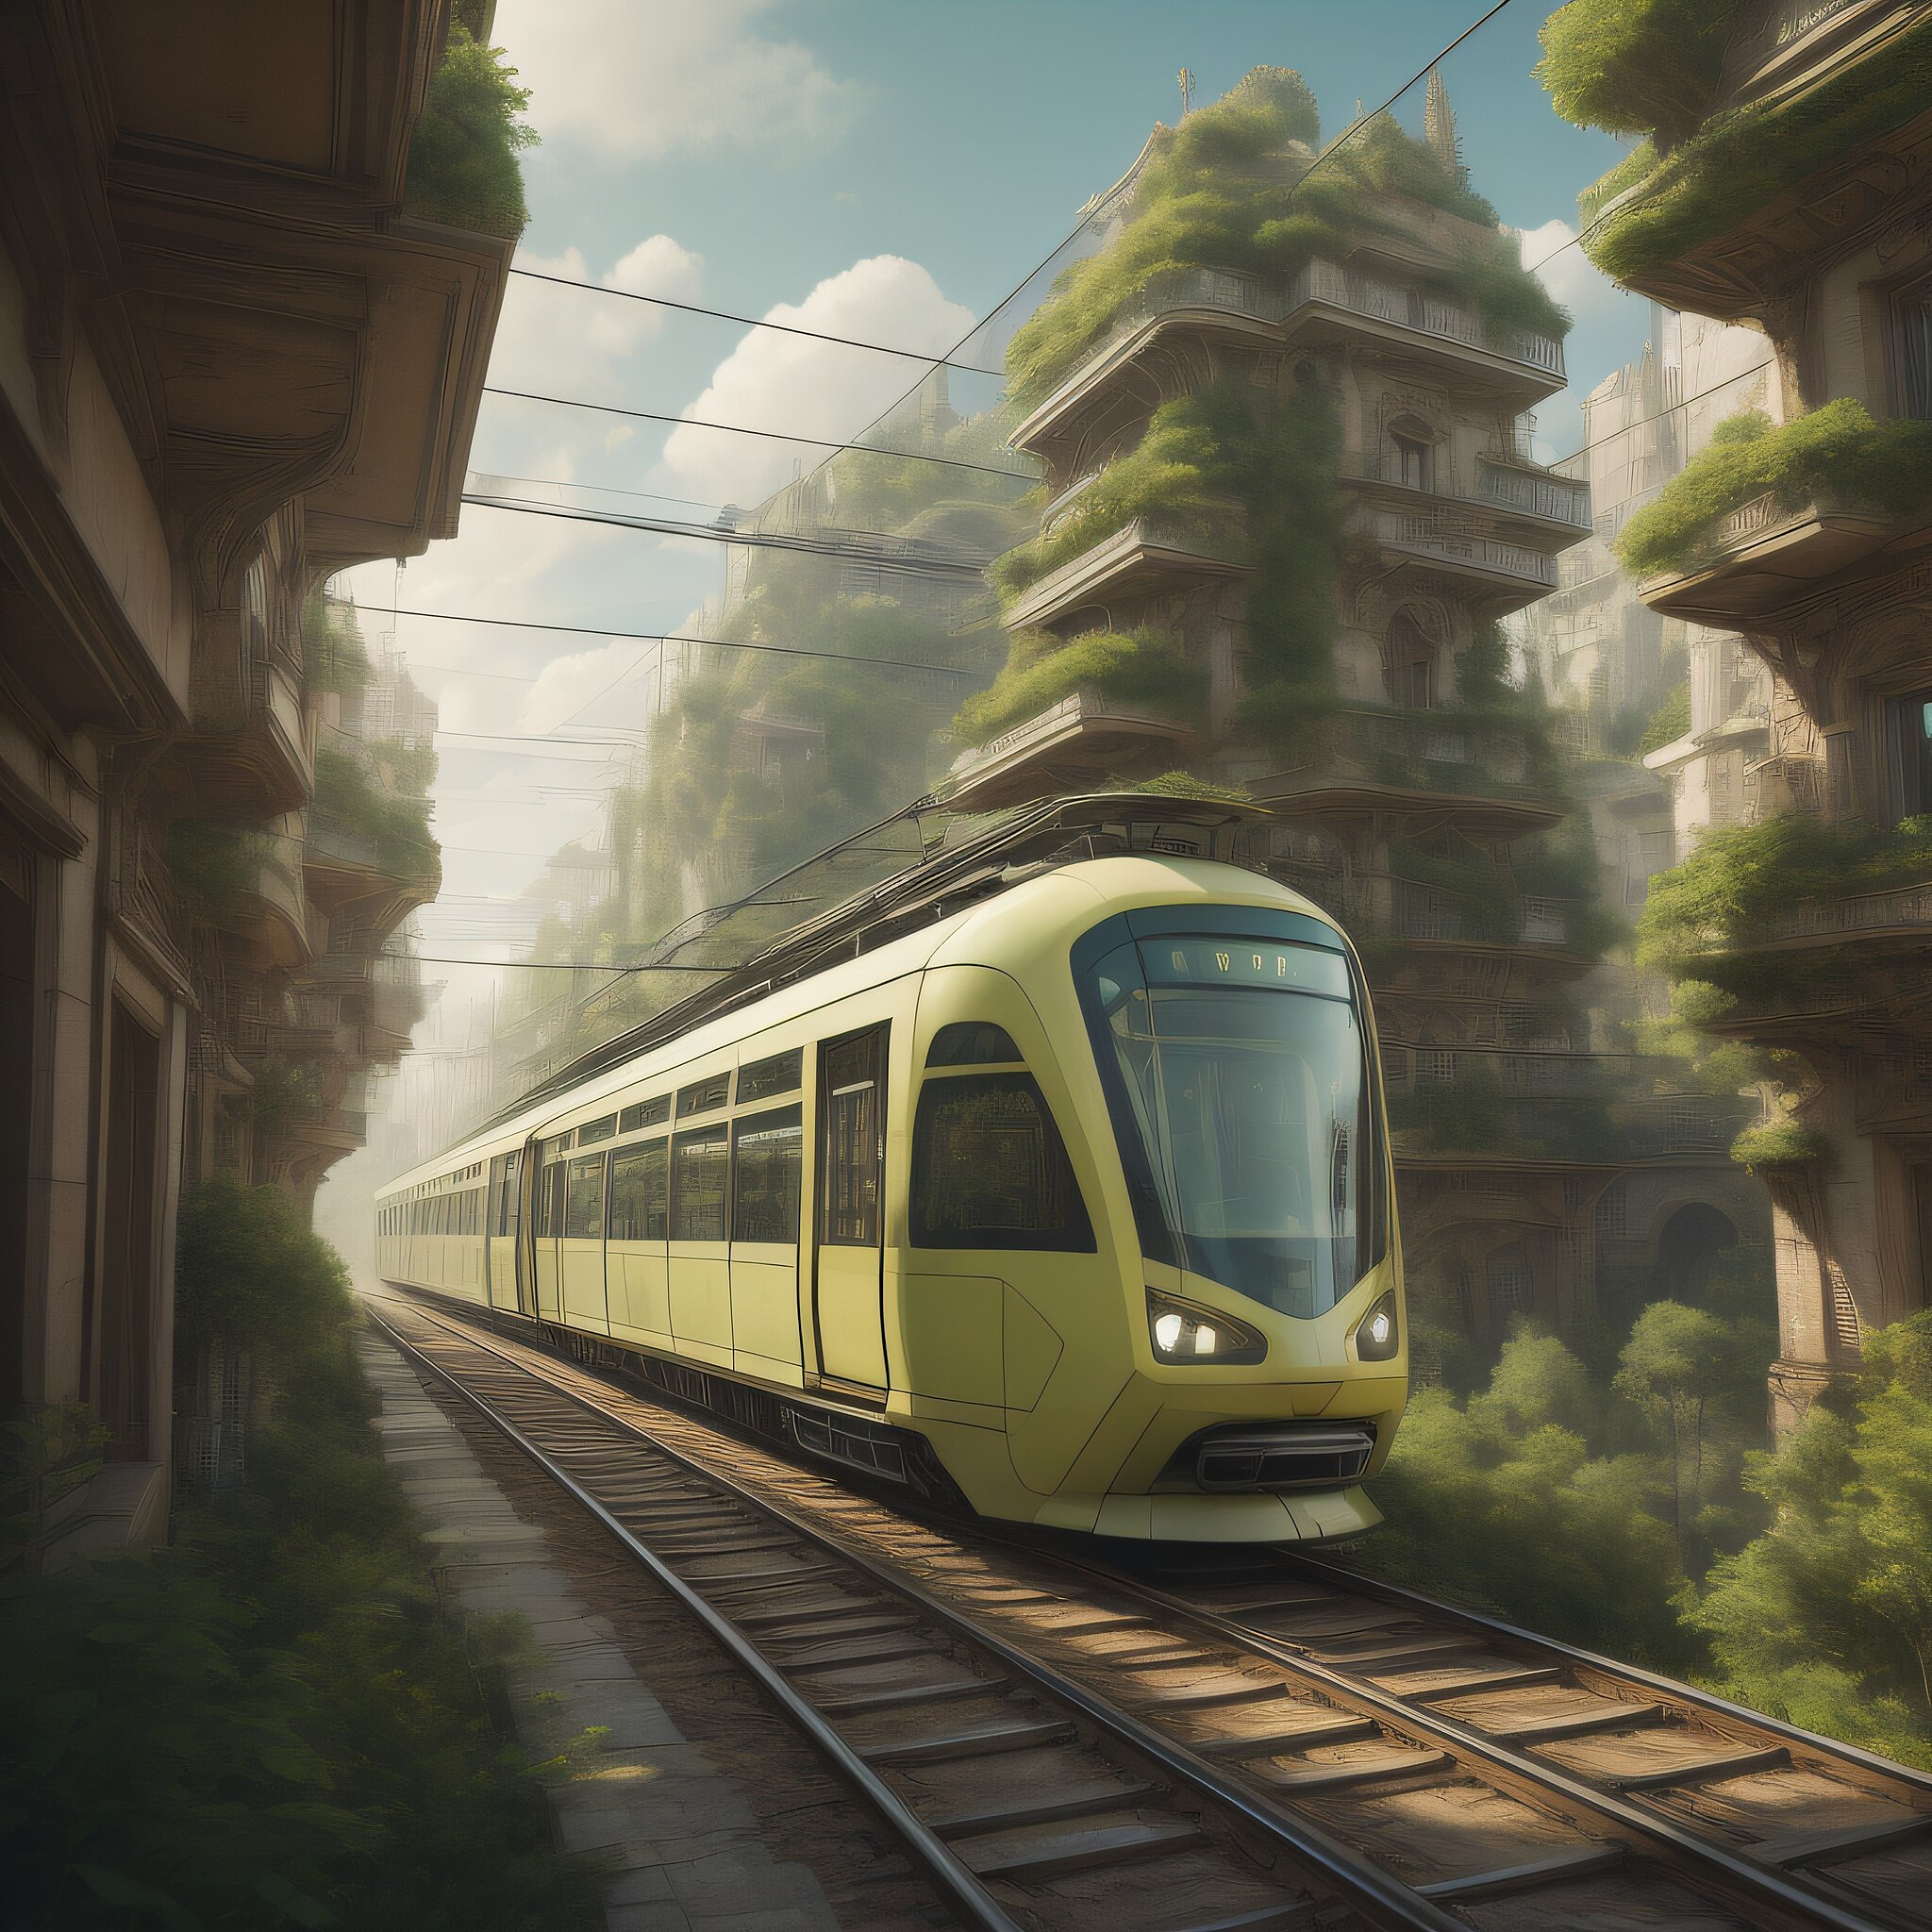 A train gliding through a solarpunk inspired city I built with a